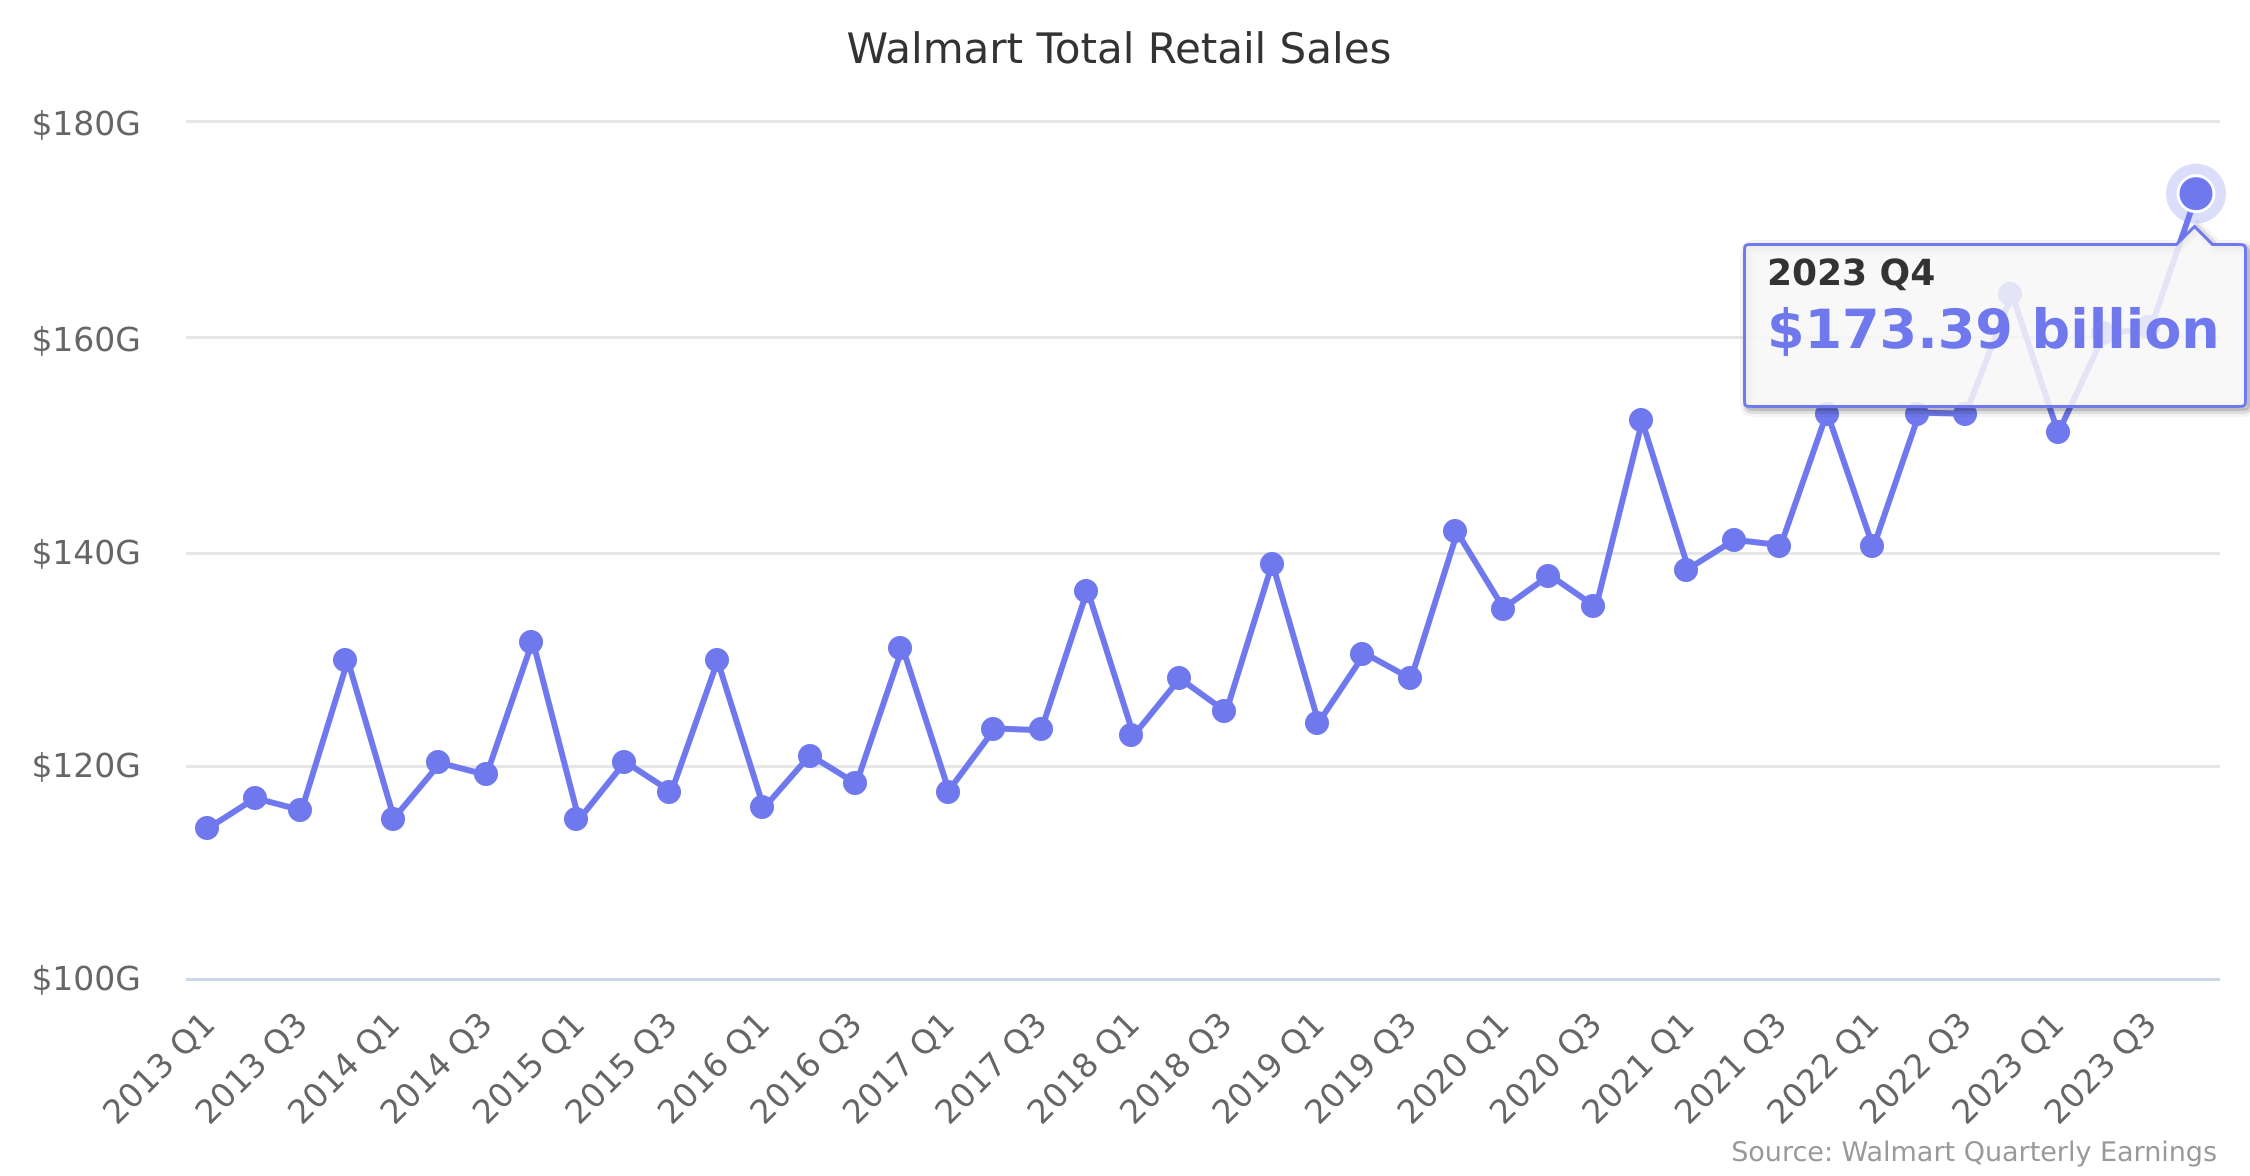 Walmart Total Retail Sales